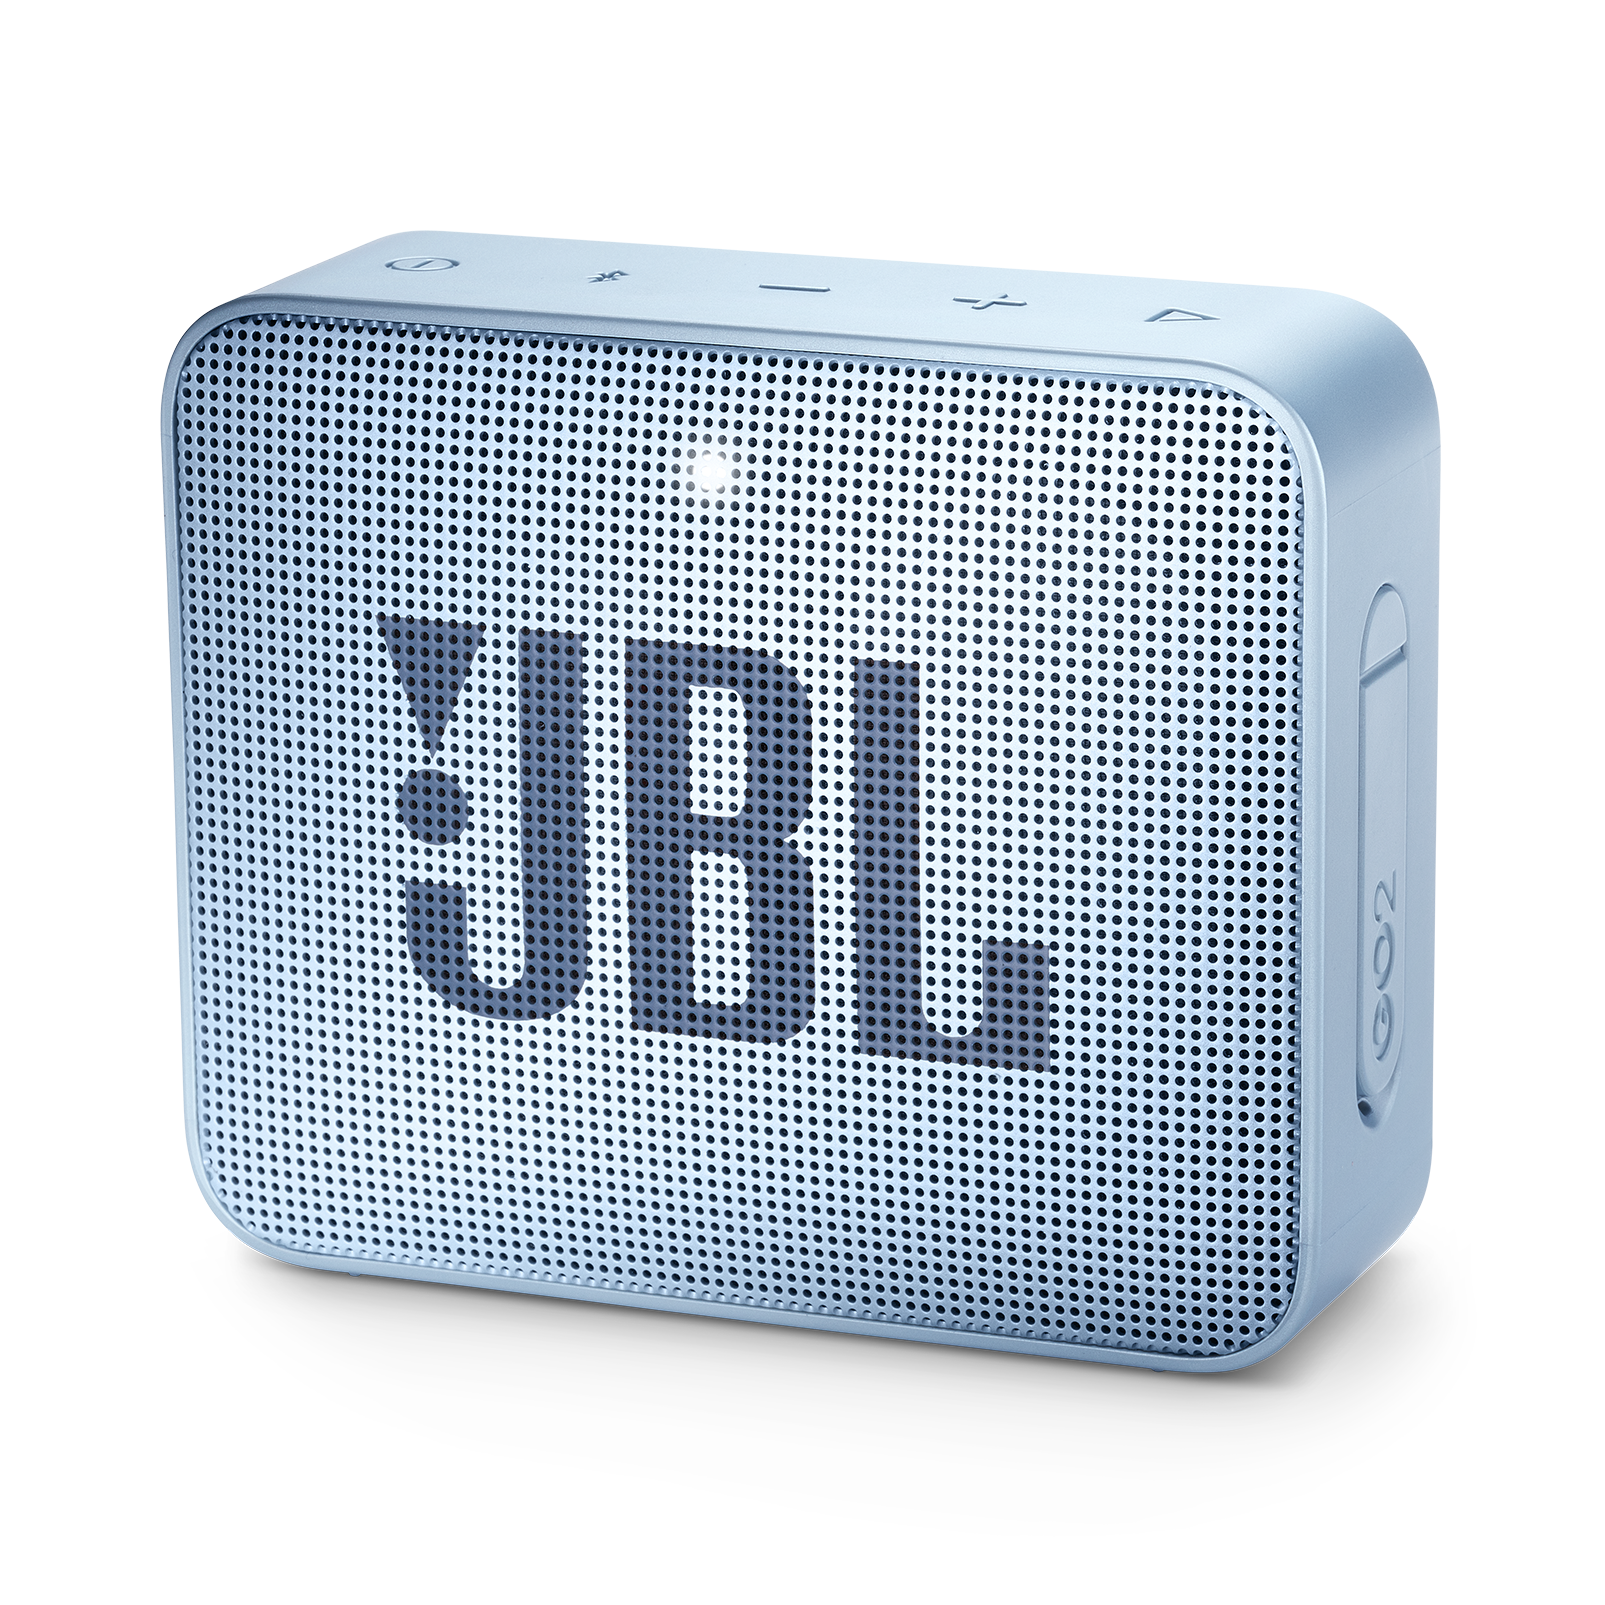 JBL Go 2 - Icecube Cyan - Portable Bluetooth speaker - Hero